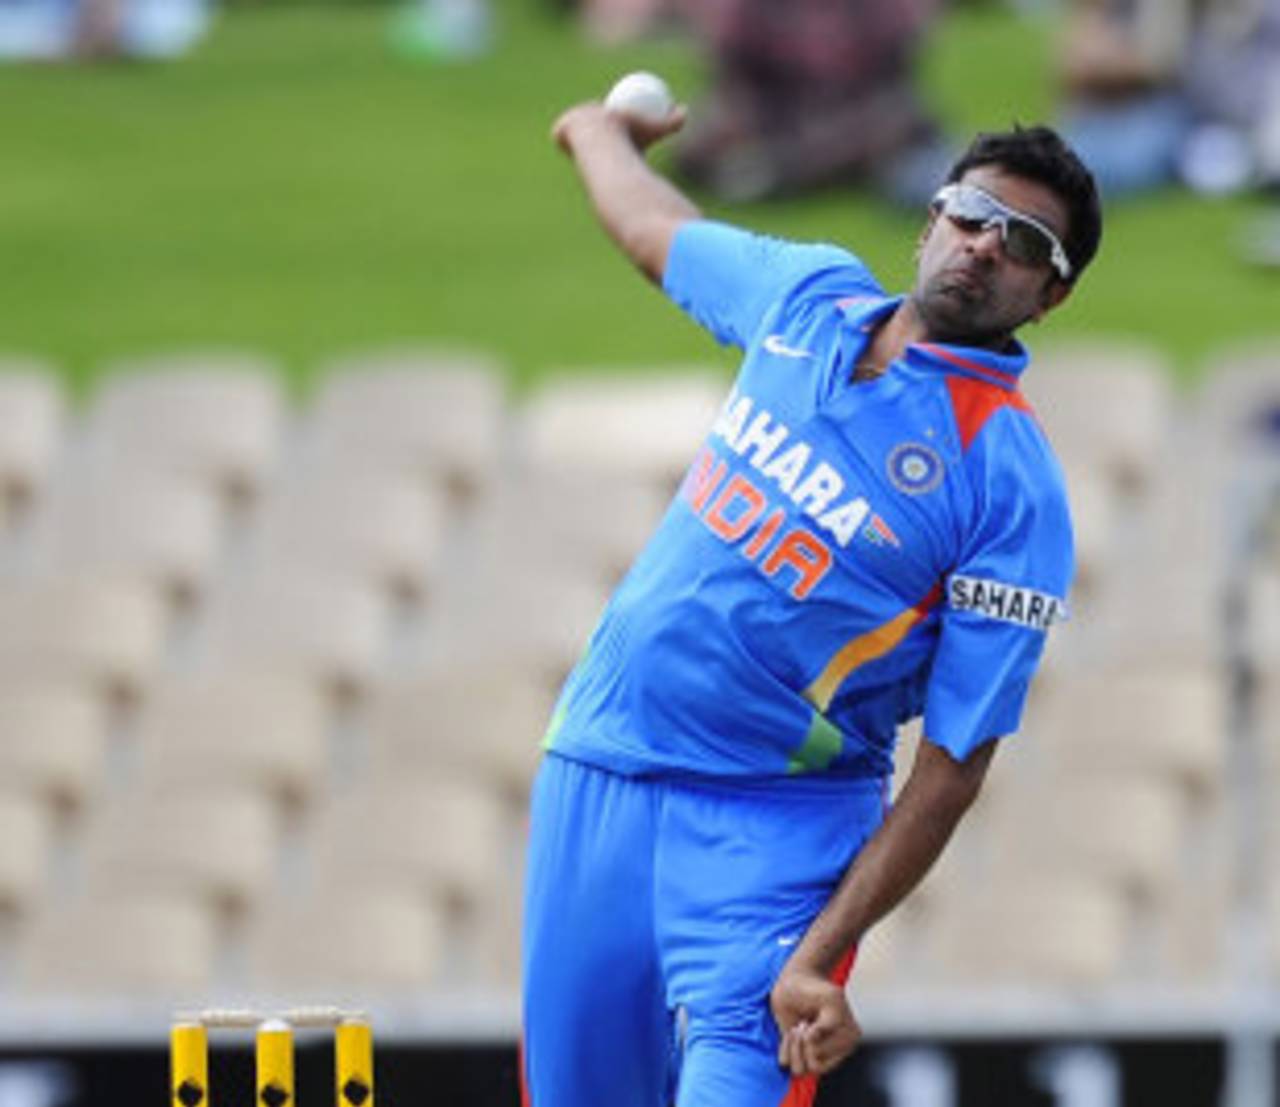 R Ashwin had a good day with the ball - 10-1-30-2, India v Sri Lanka, Commonwealth Bank Series, Adelaide, February 14, 2012